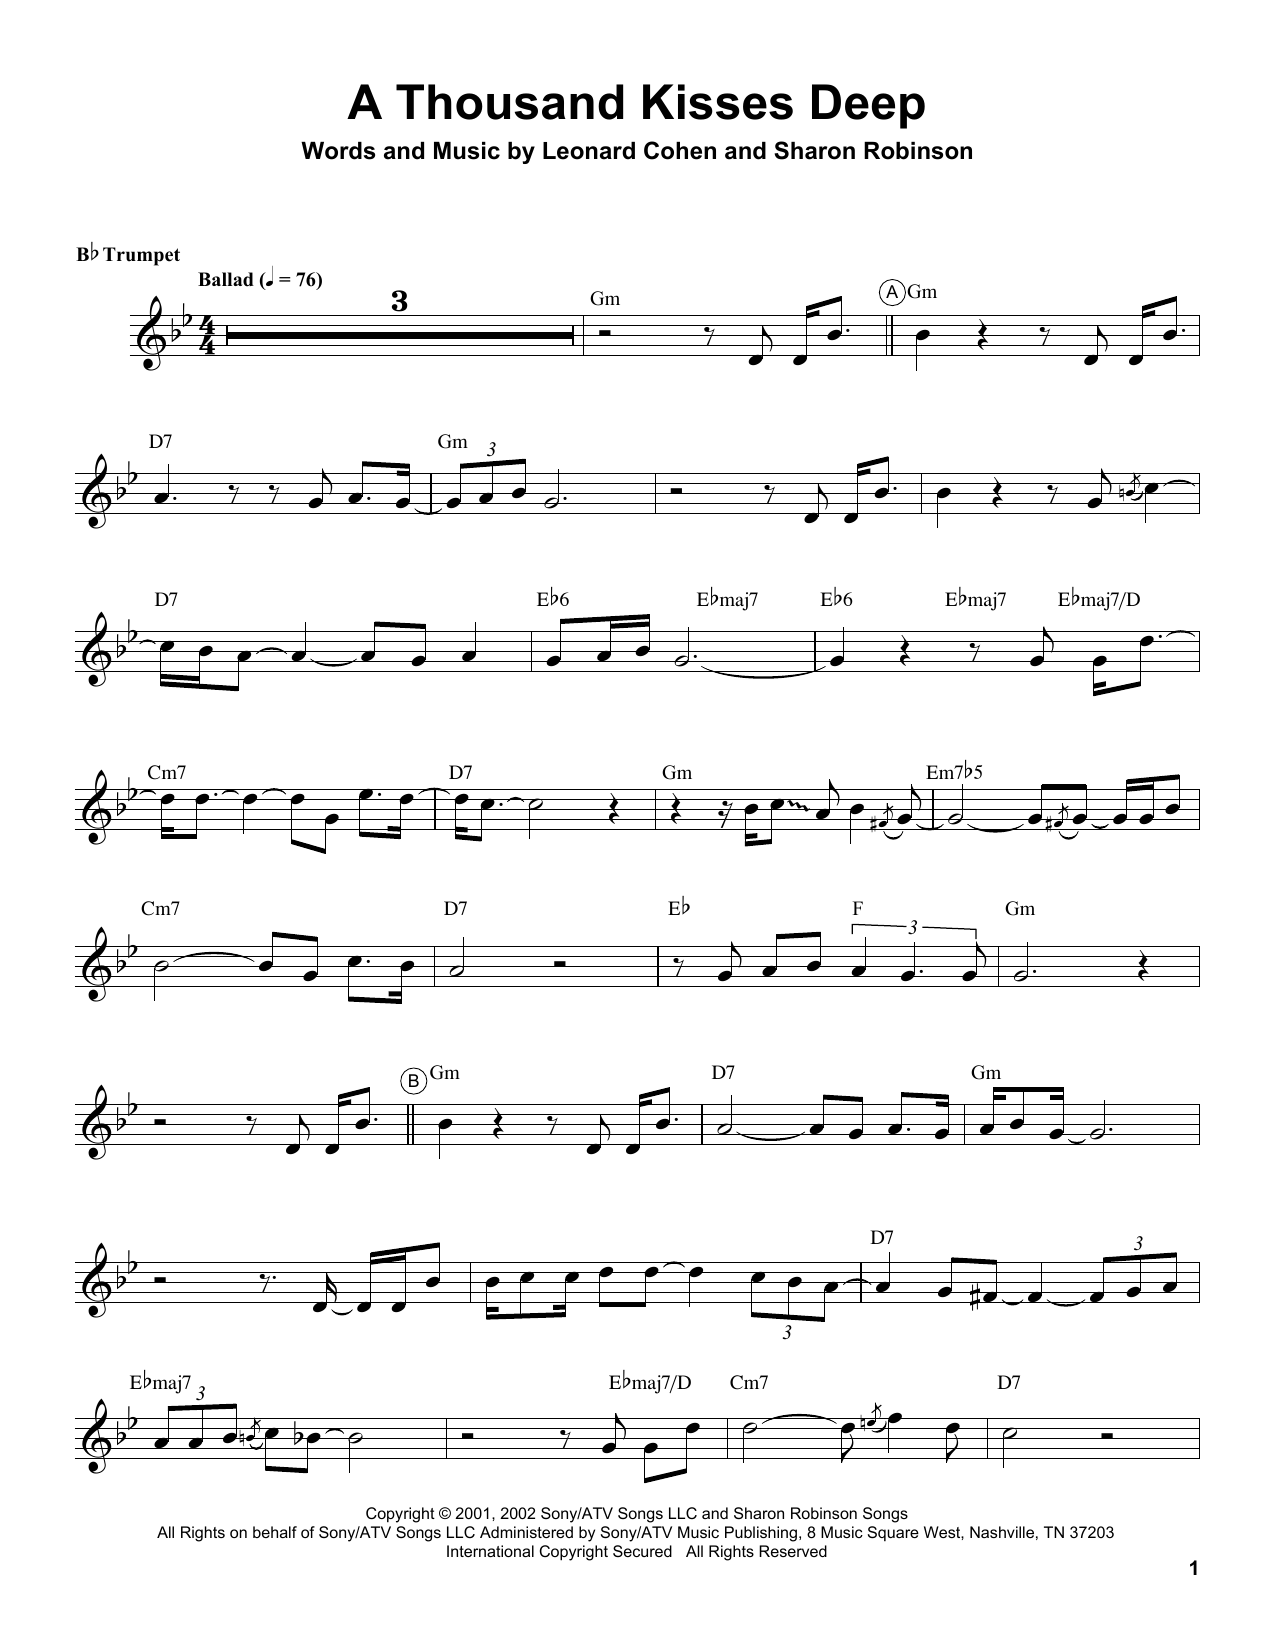 Chris Botti A Thousand Kisses Deep Sheet Music Notes & Chords for Trumpet Transcription - Download or Print PDF